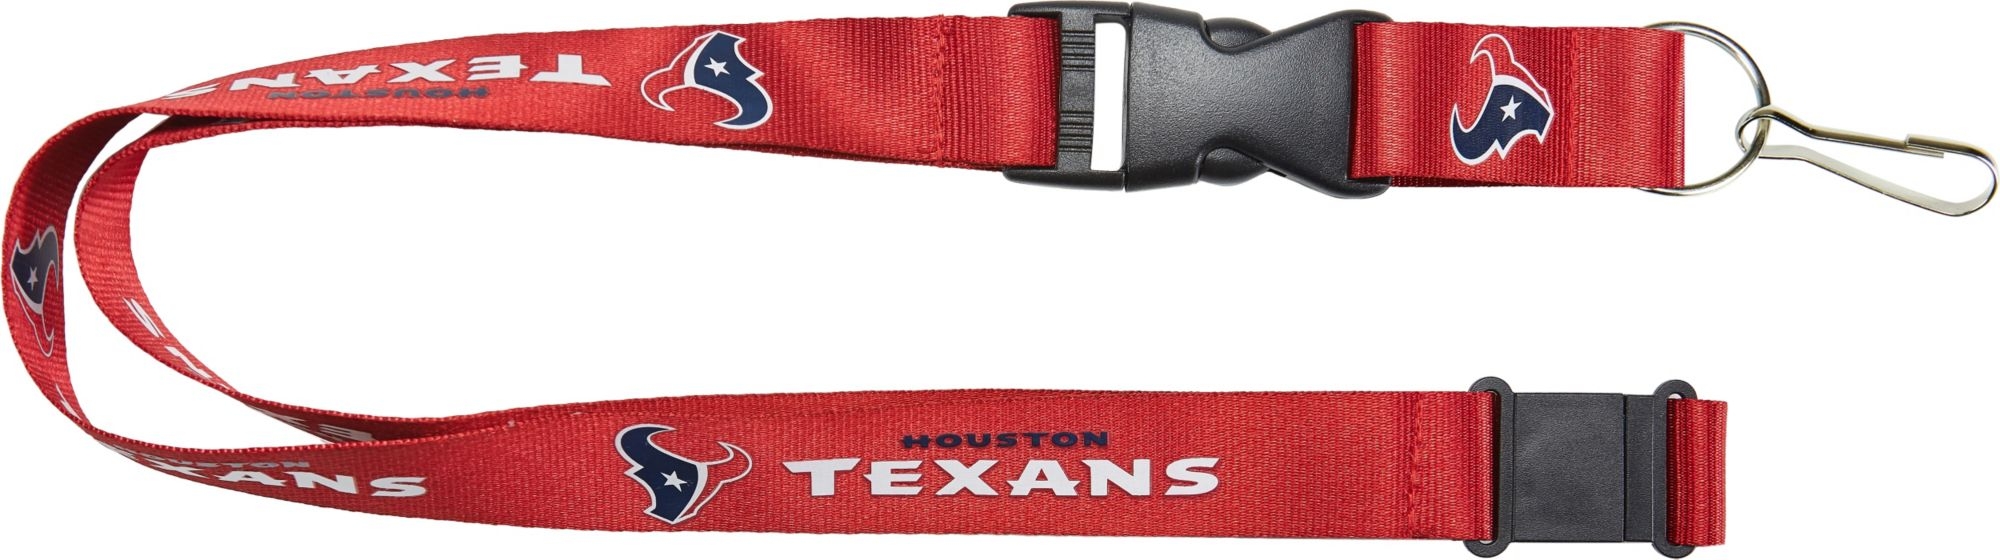 NFL Houston Texans Lanyard - Red